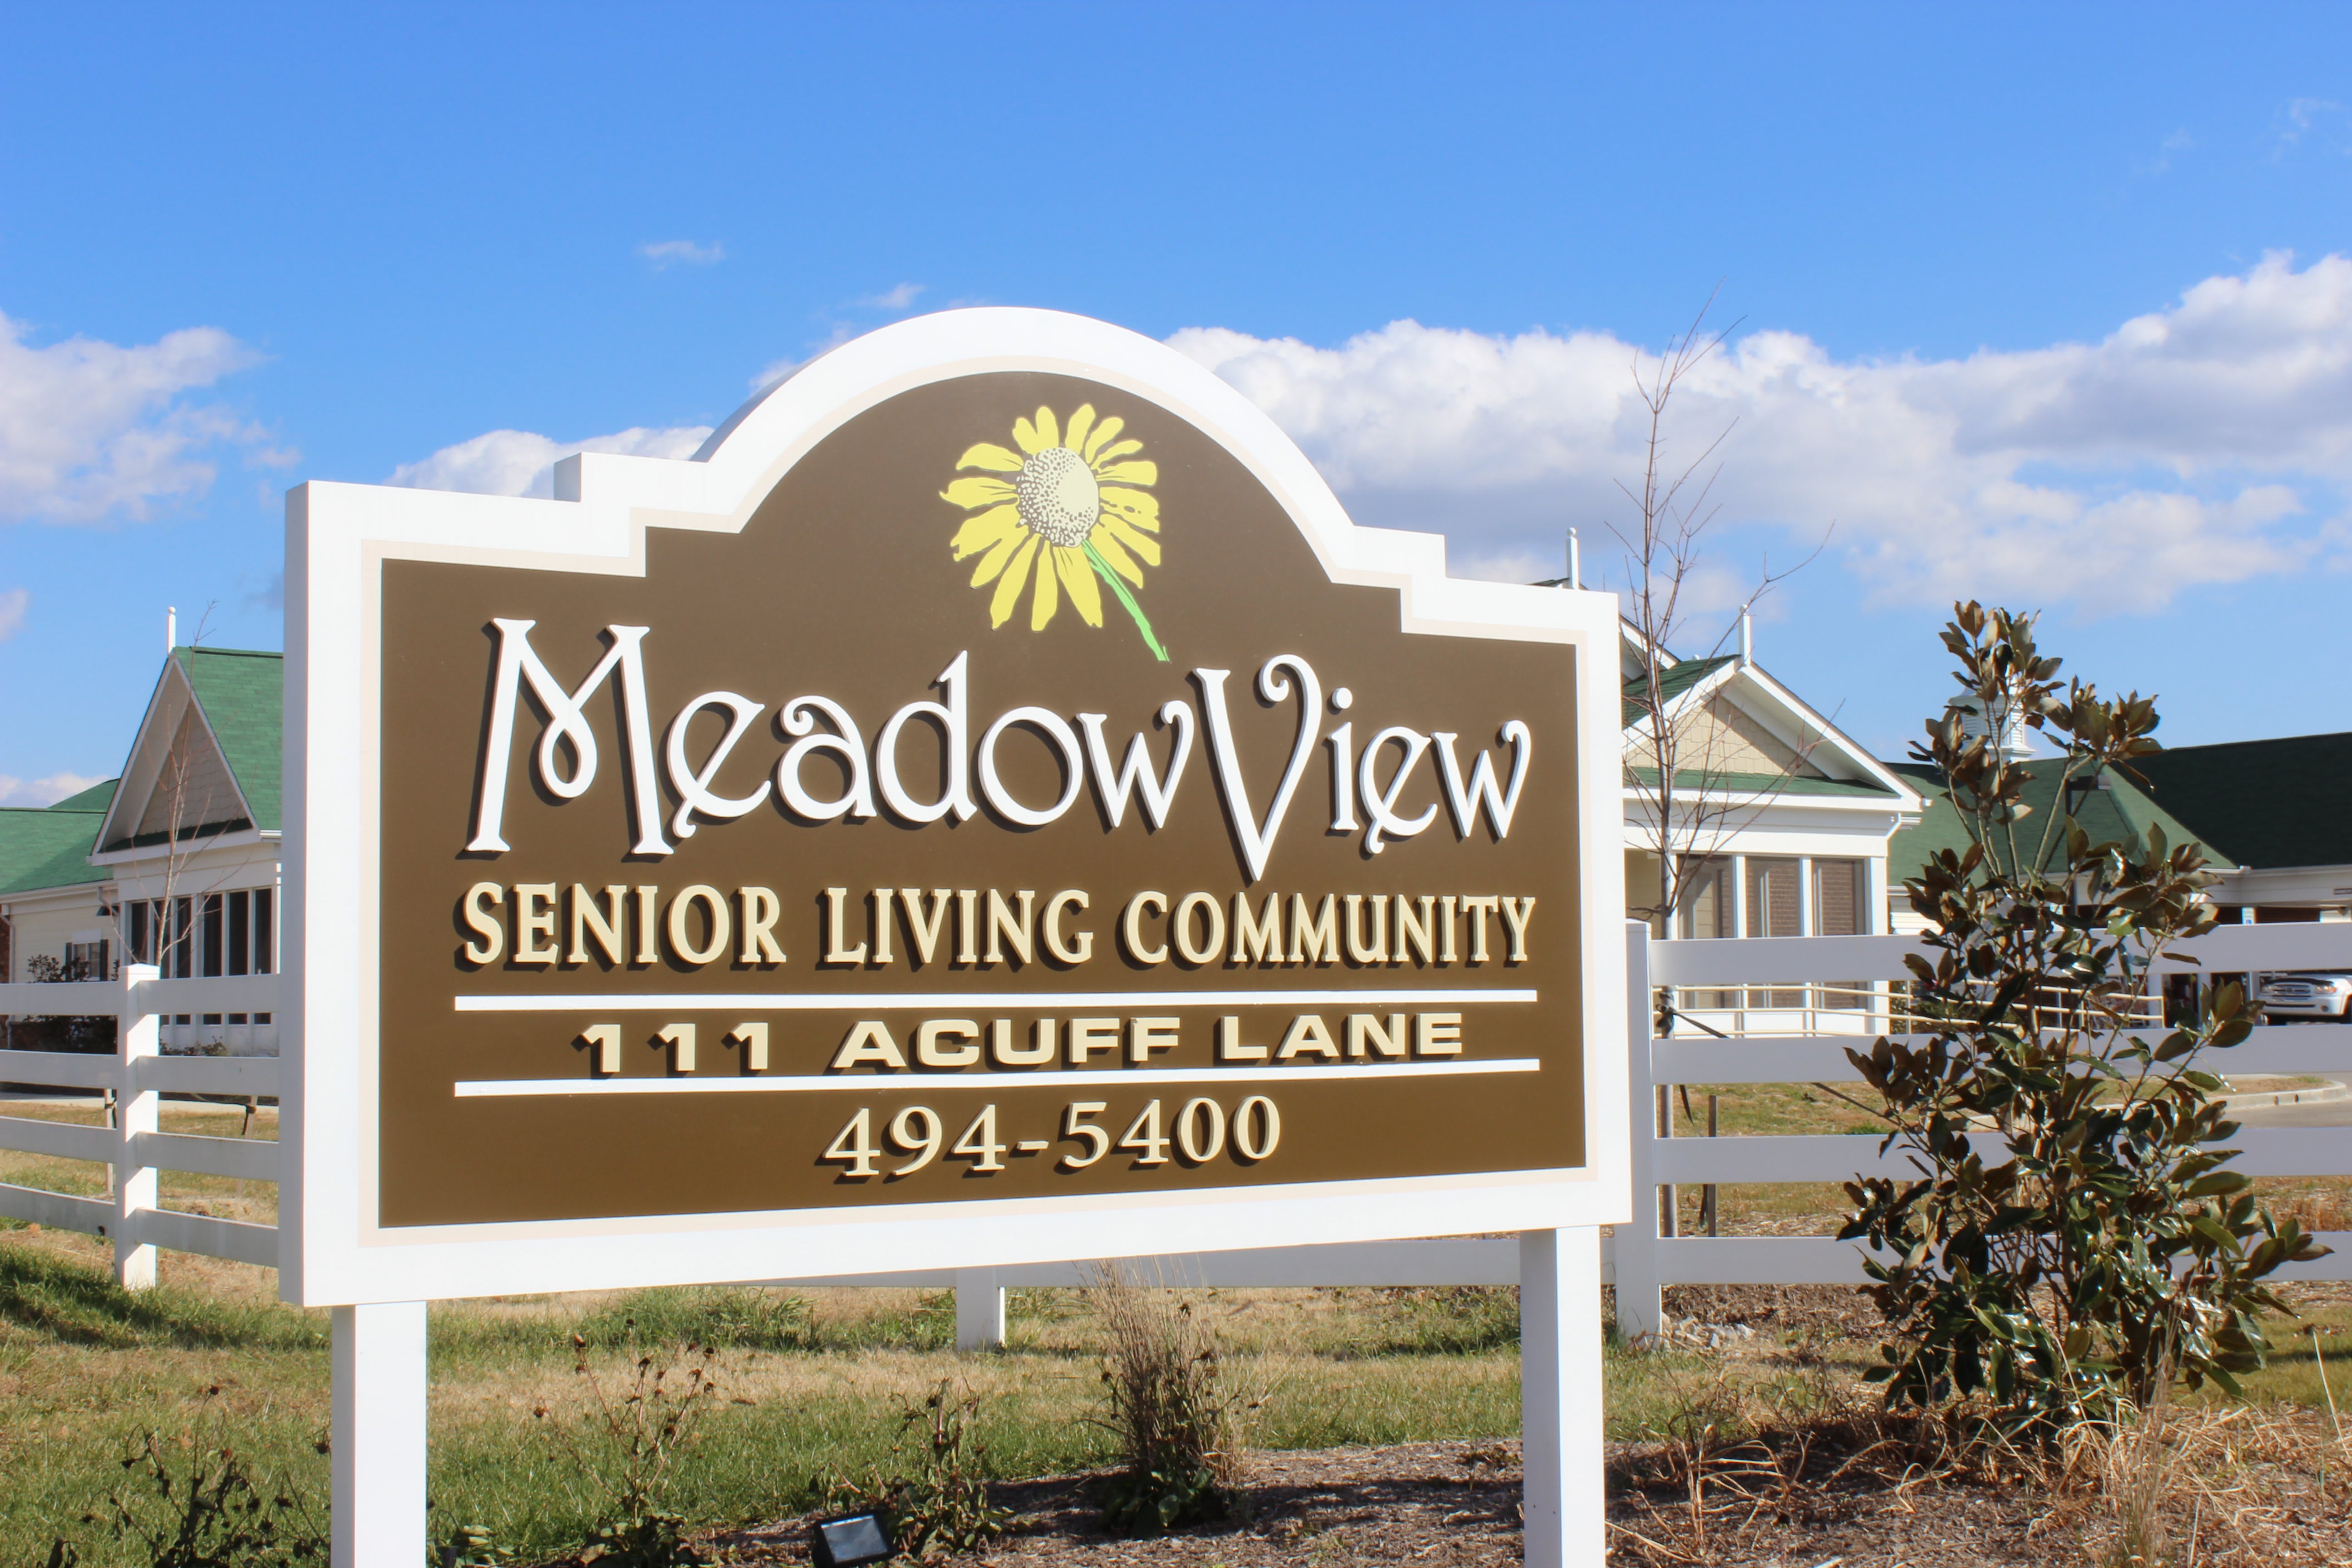 Meadow View Senior Living Community community exterior